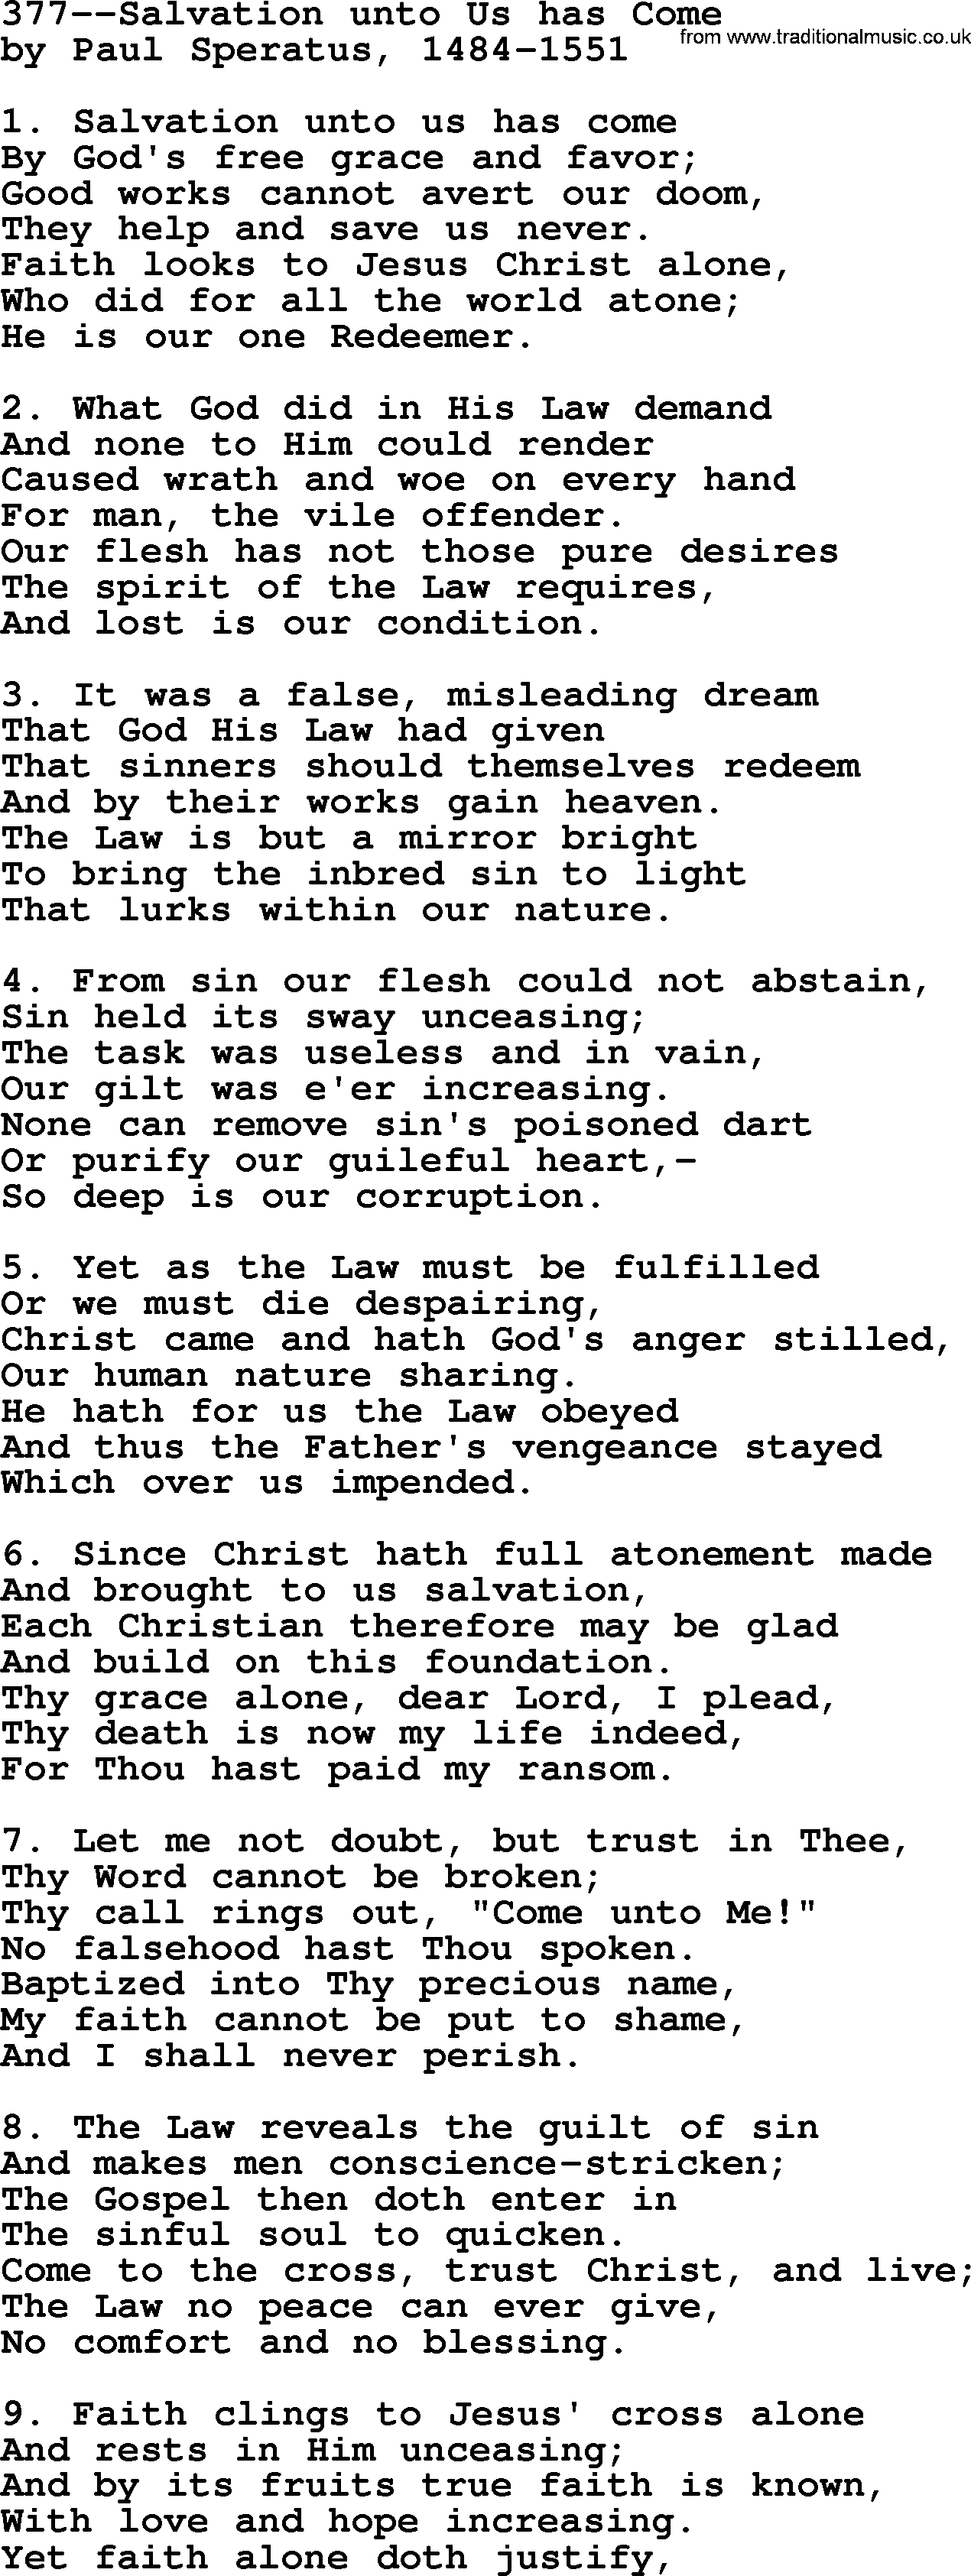 Lutheran Hymn: 377--Salvation unto Us has Come.txt lyrics with PDF